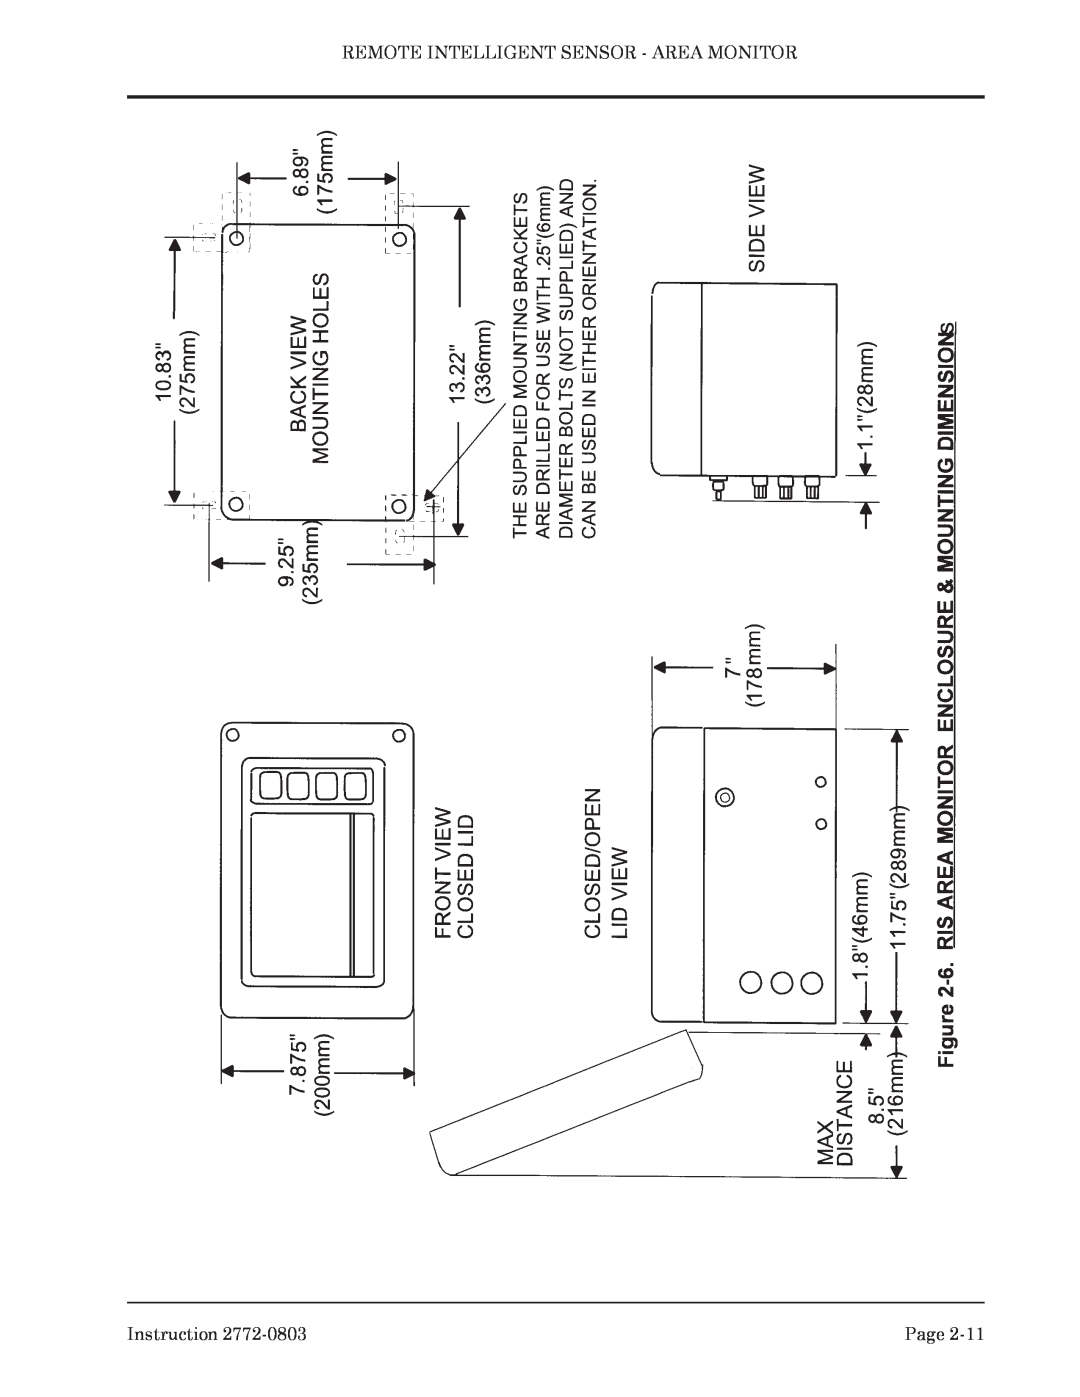 Bacharach 2772-0803 manual Remote Intelligent Sensor - Area Monitor, Instruction, Page 